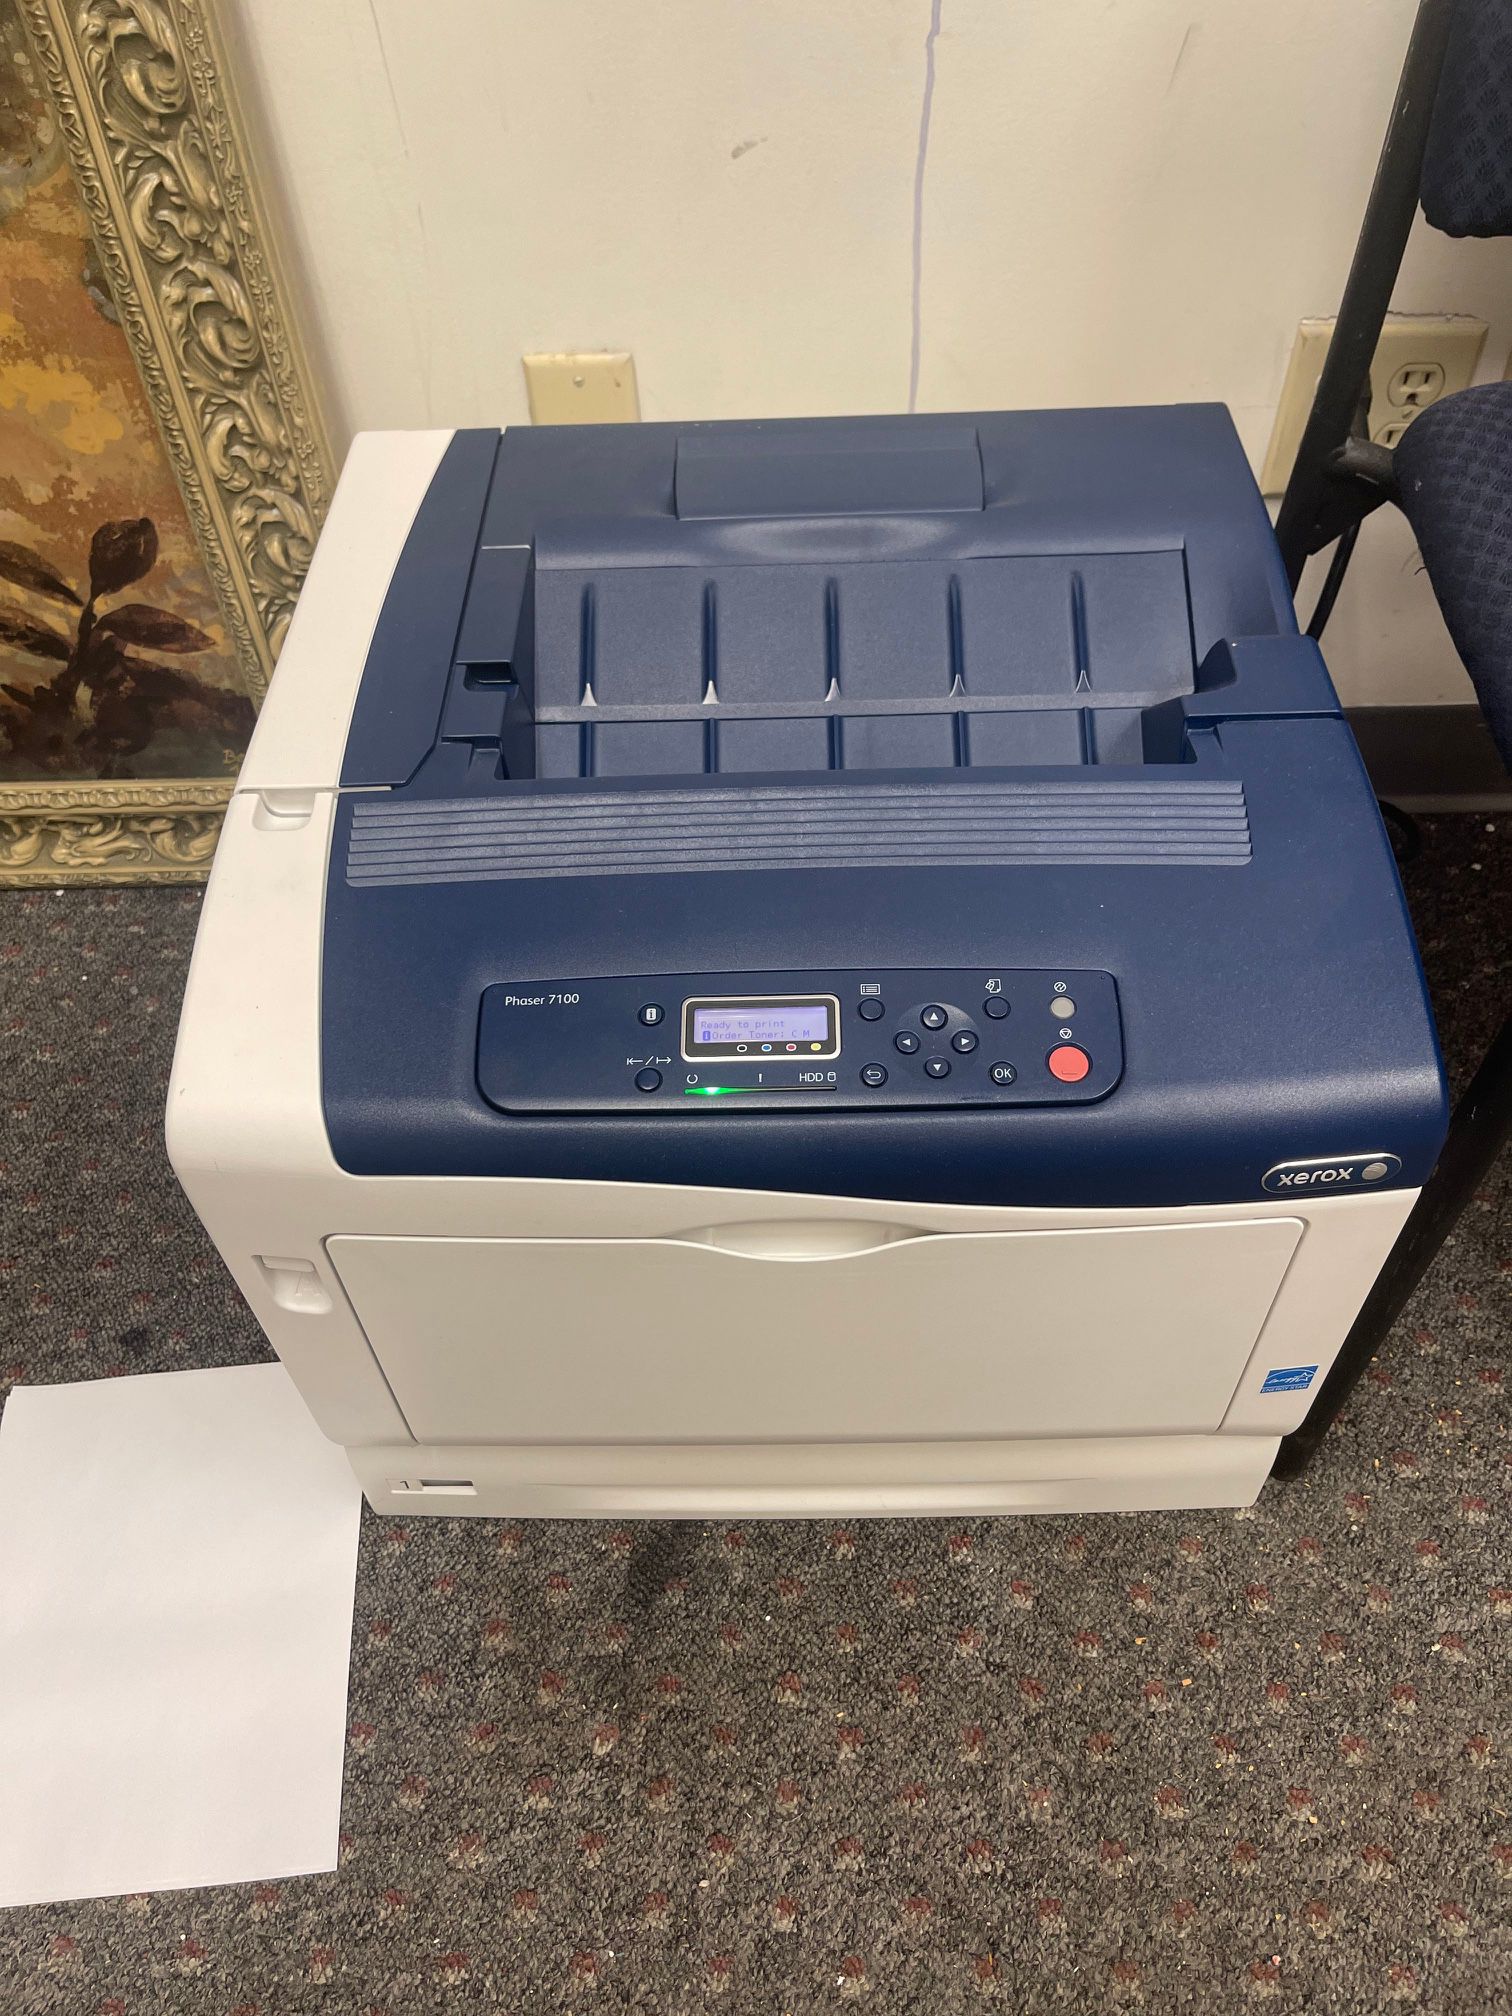 CAV, S11, Printer,  Xerox Phaser 7100 Color, Laser